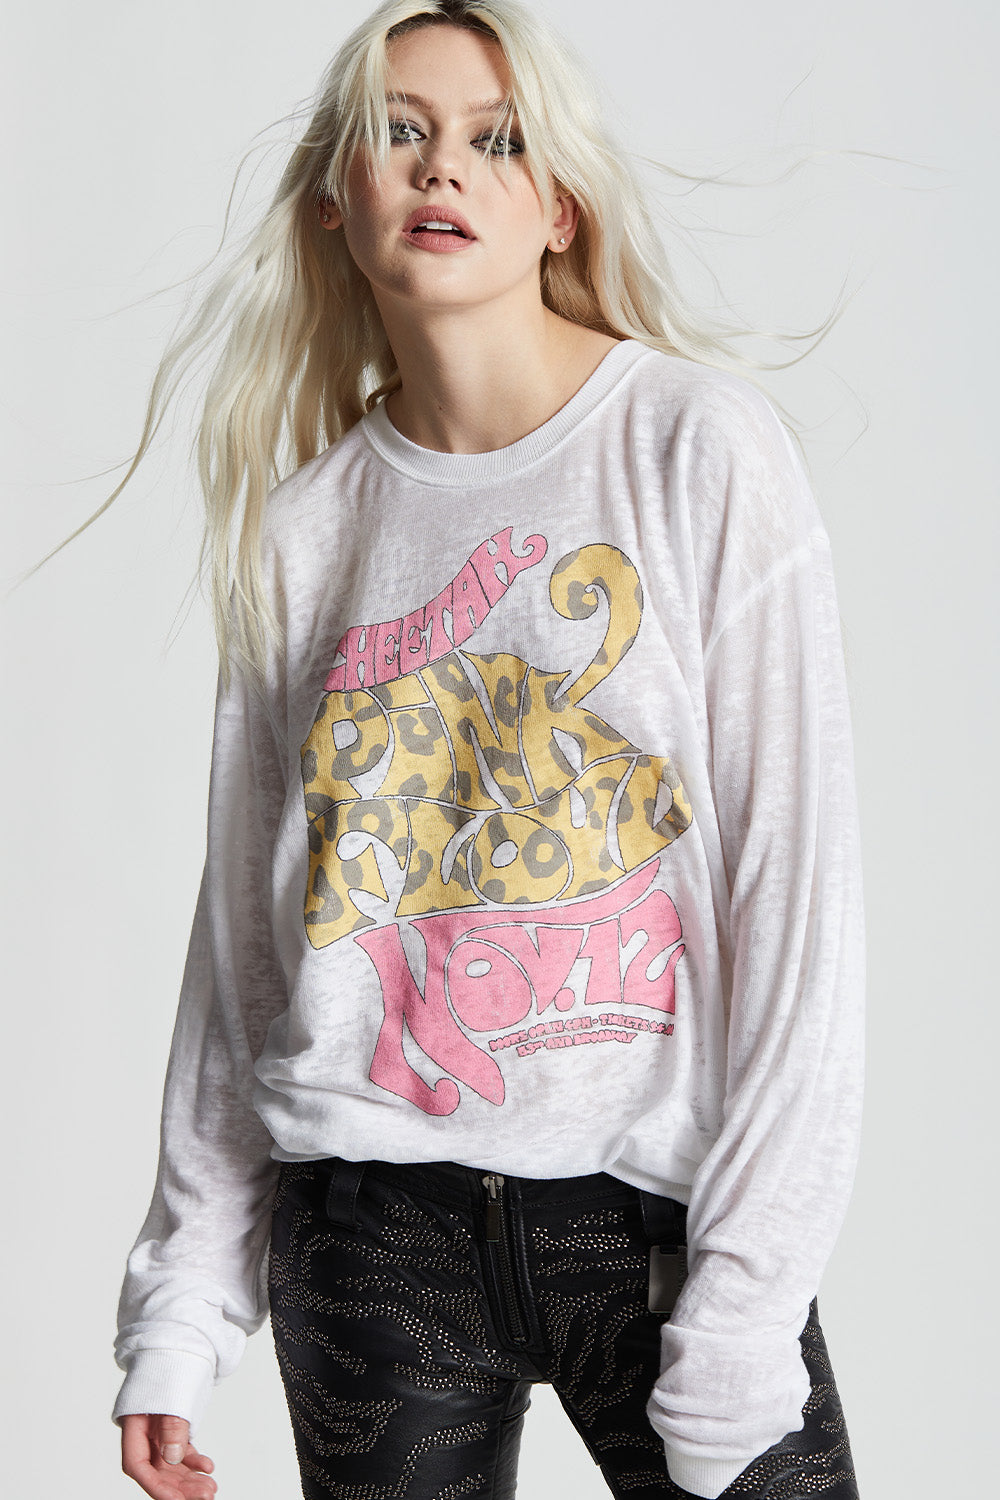 Pink Floyd Cheetah Club Sweatshirt